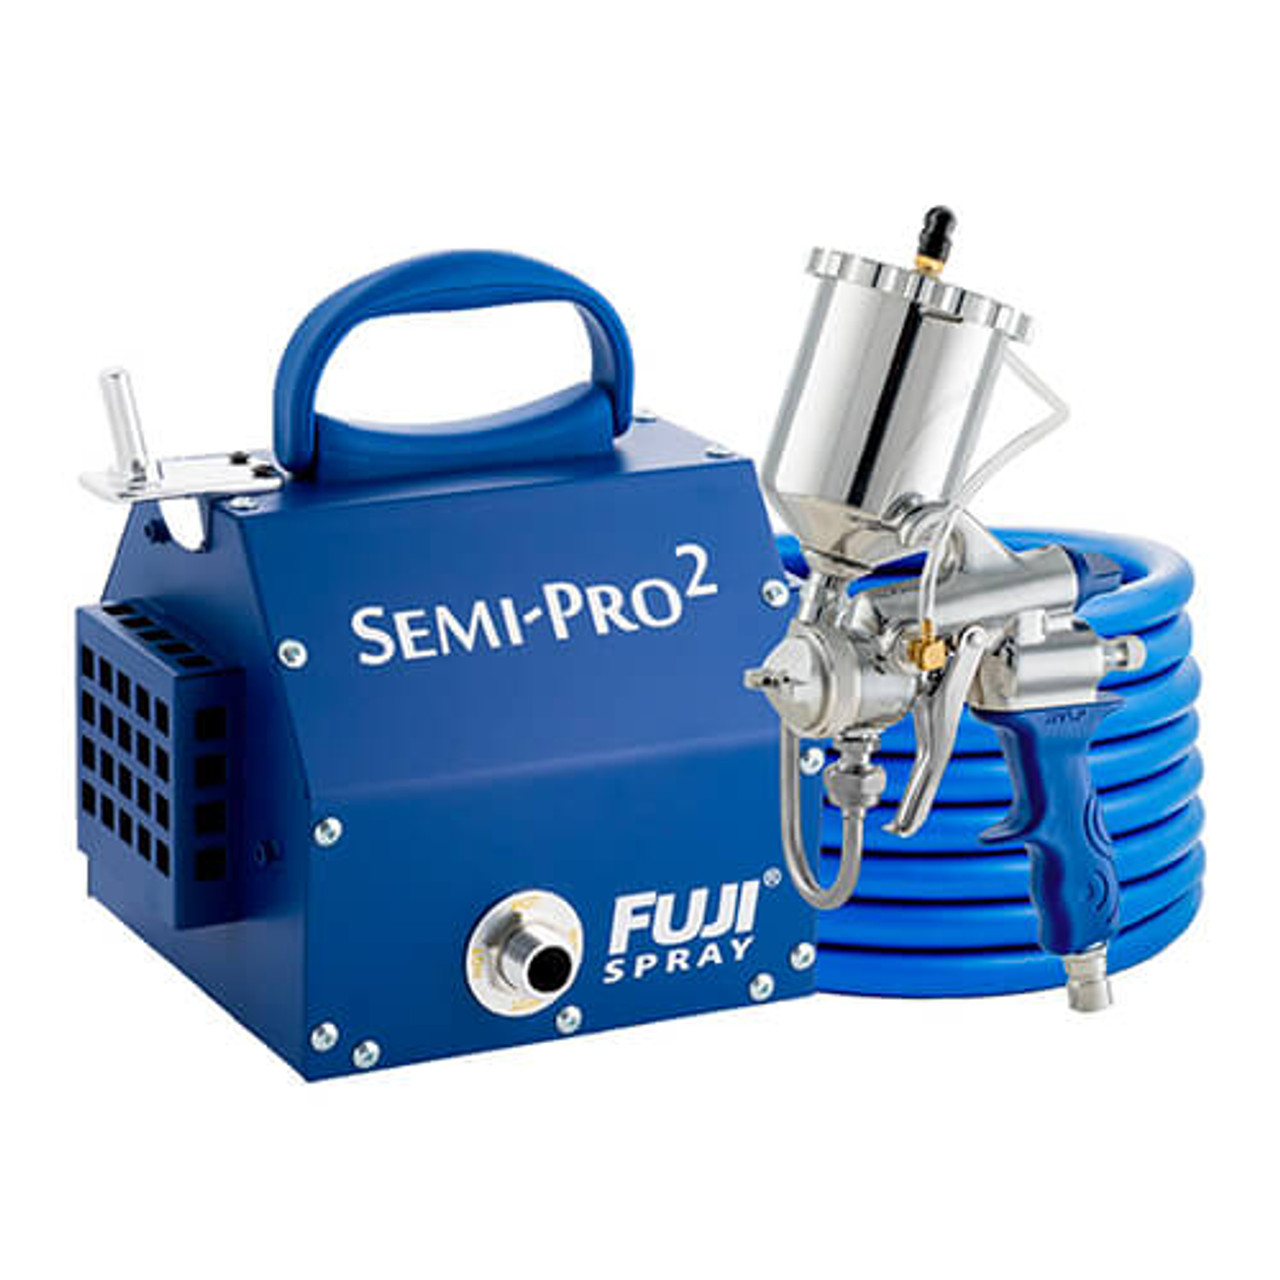 FUJI Spray Semi-Pro 2 Gravity Feed HVLP System